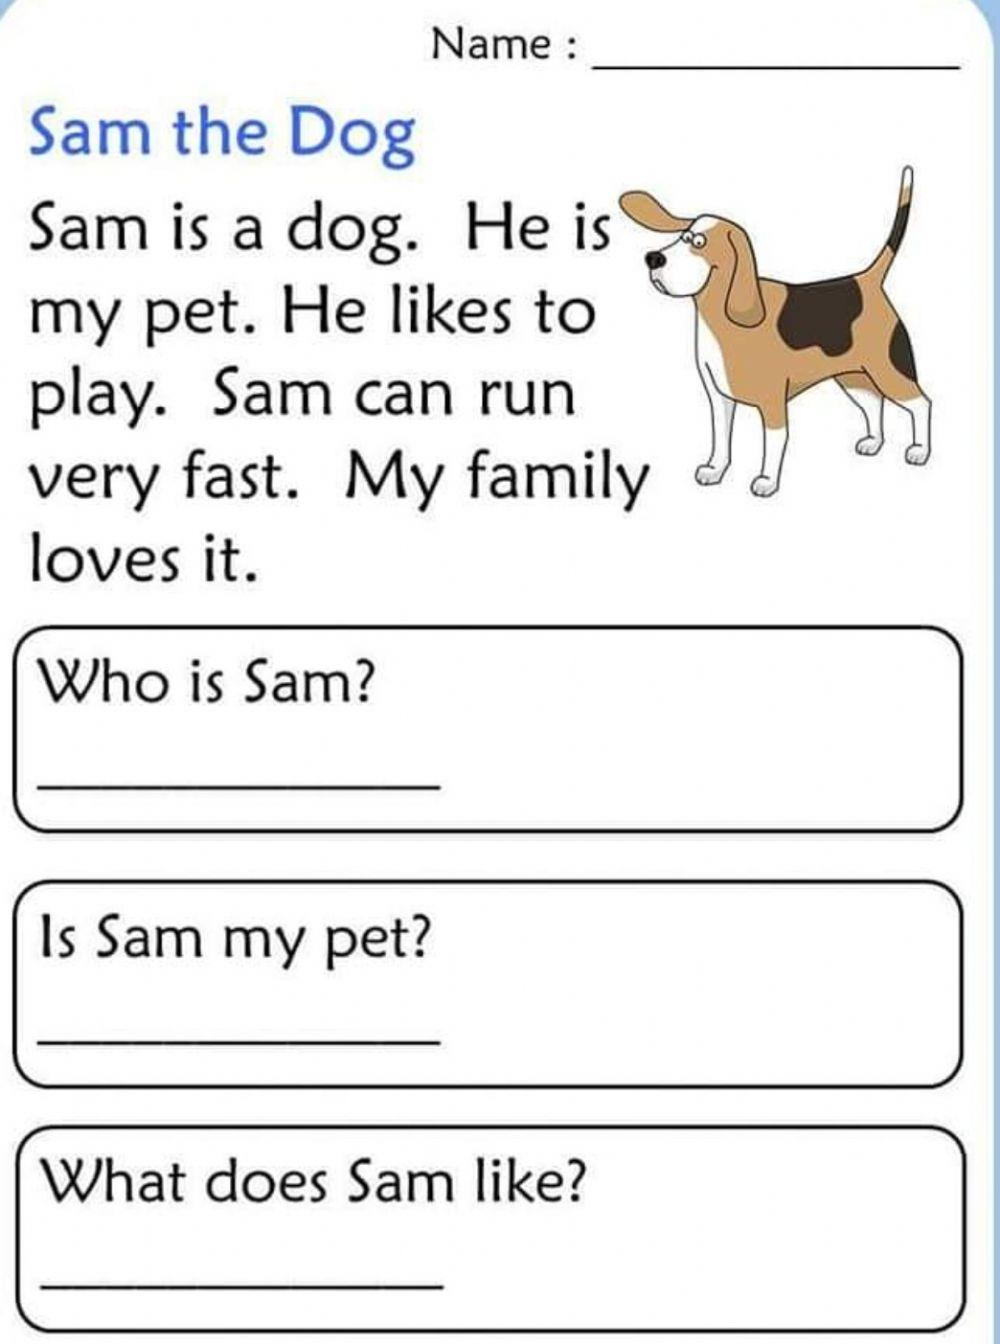 Sam the dog